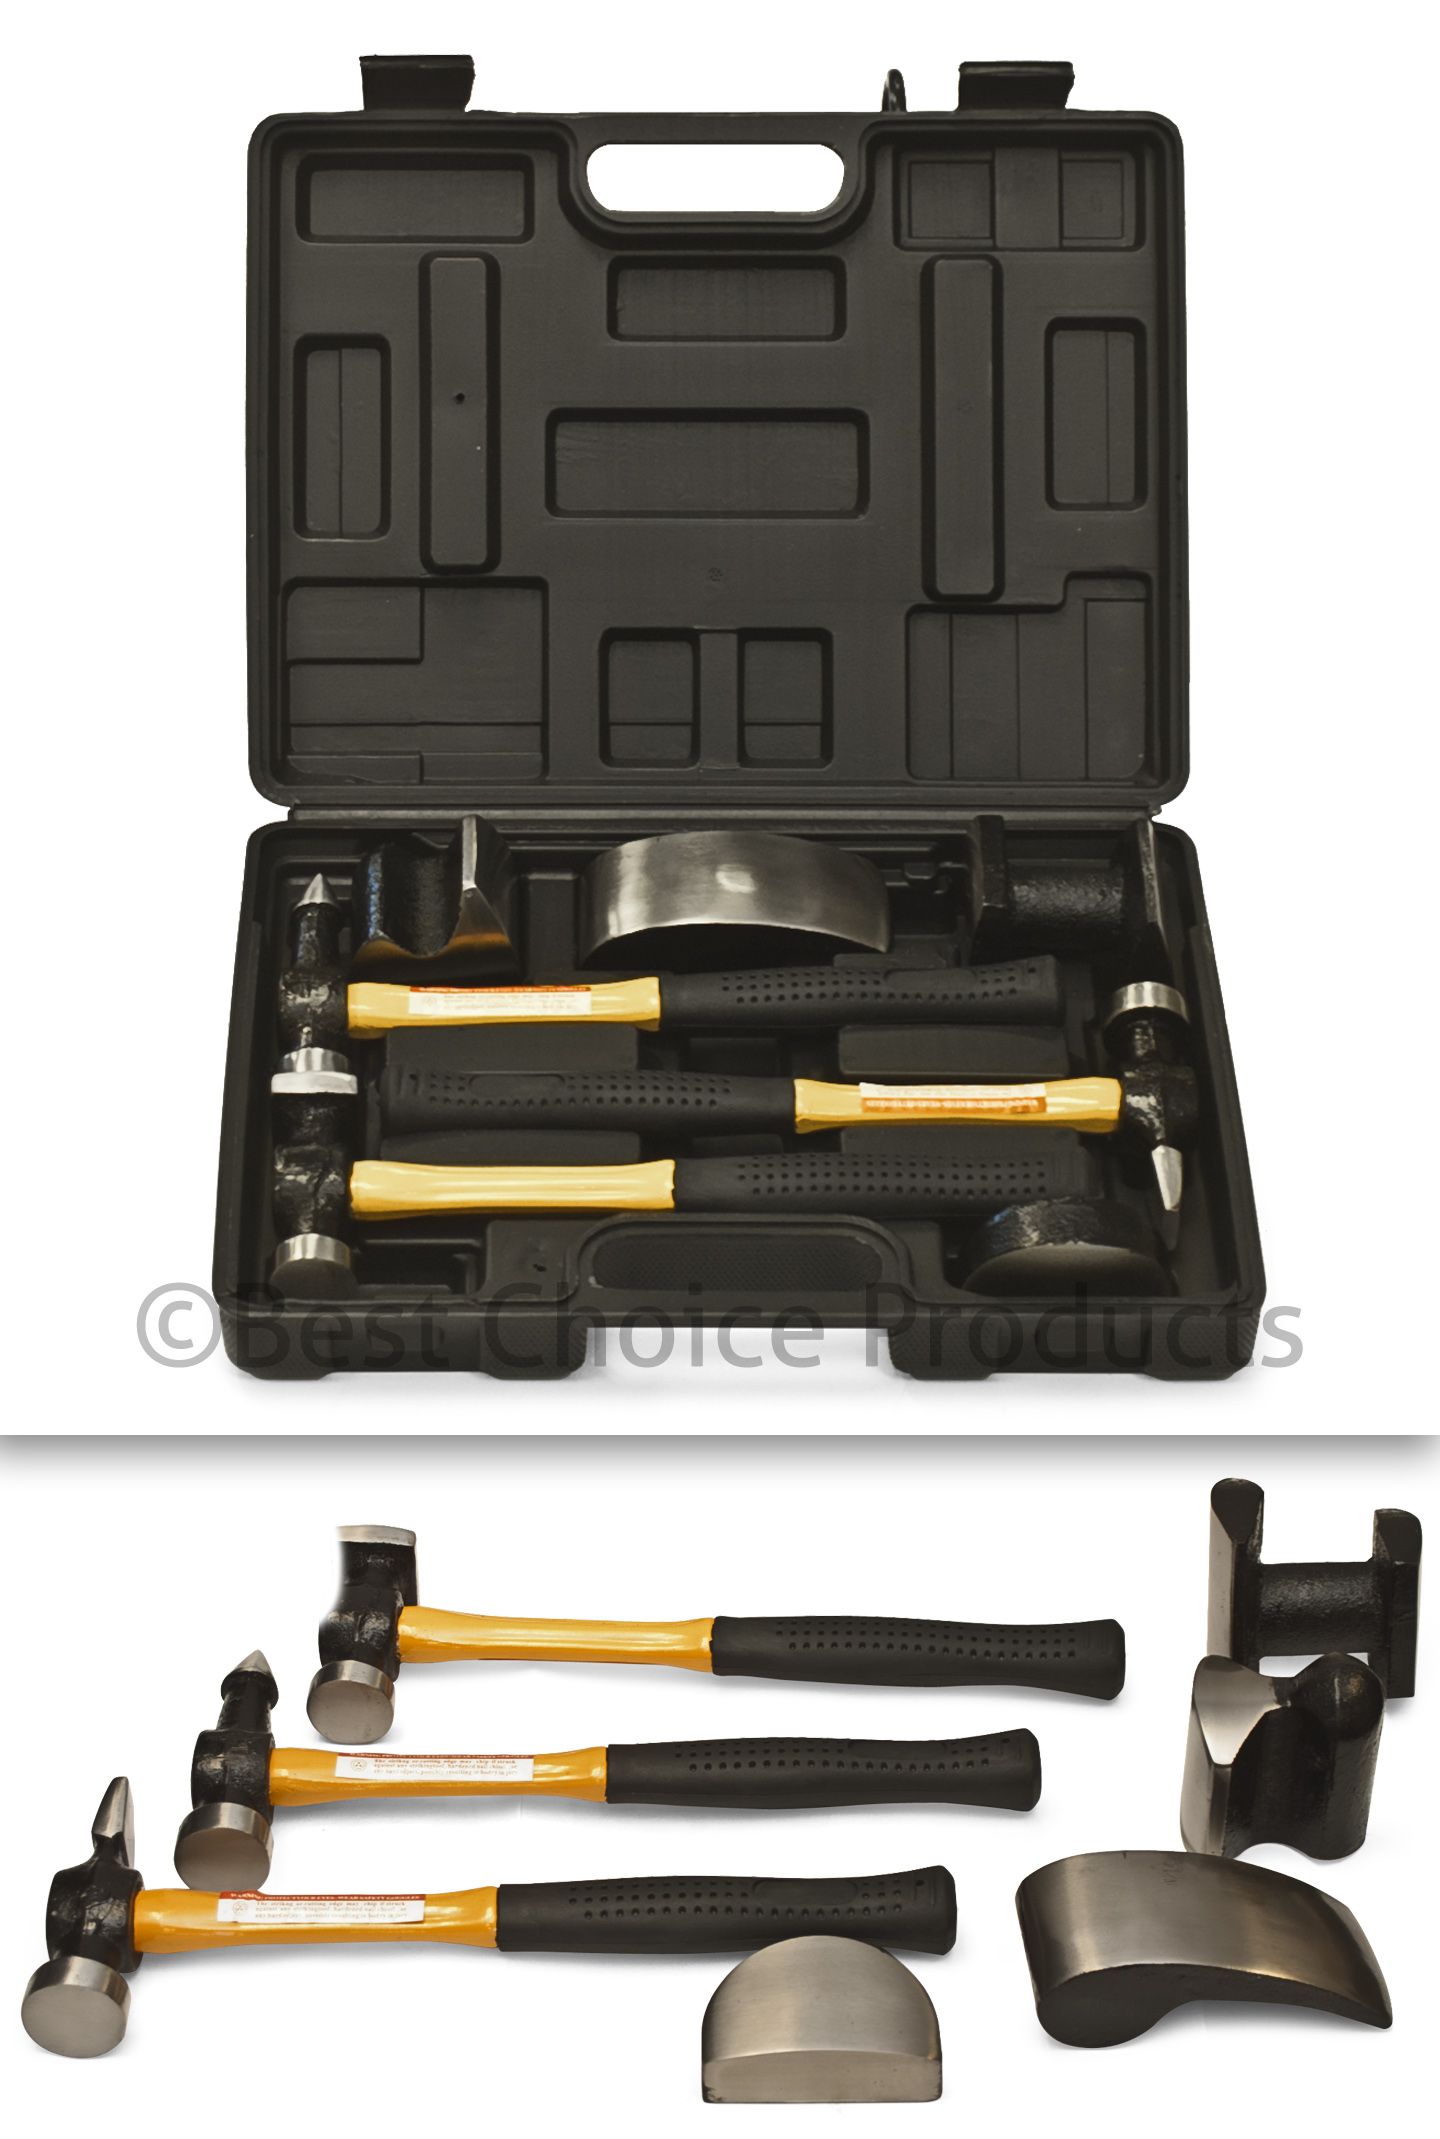 PC Auto Body & Fender Repair Kit Automotive Hand Tools Shop 